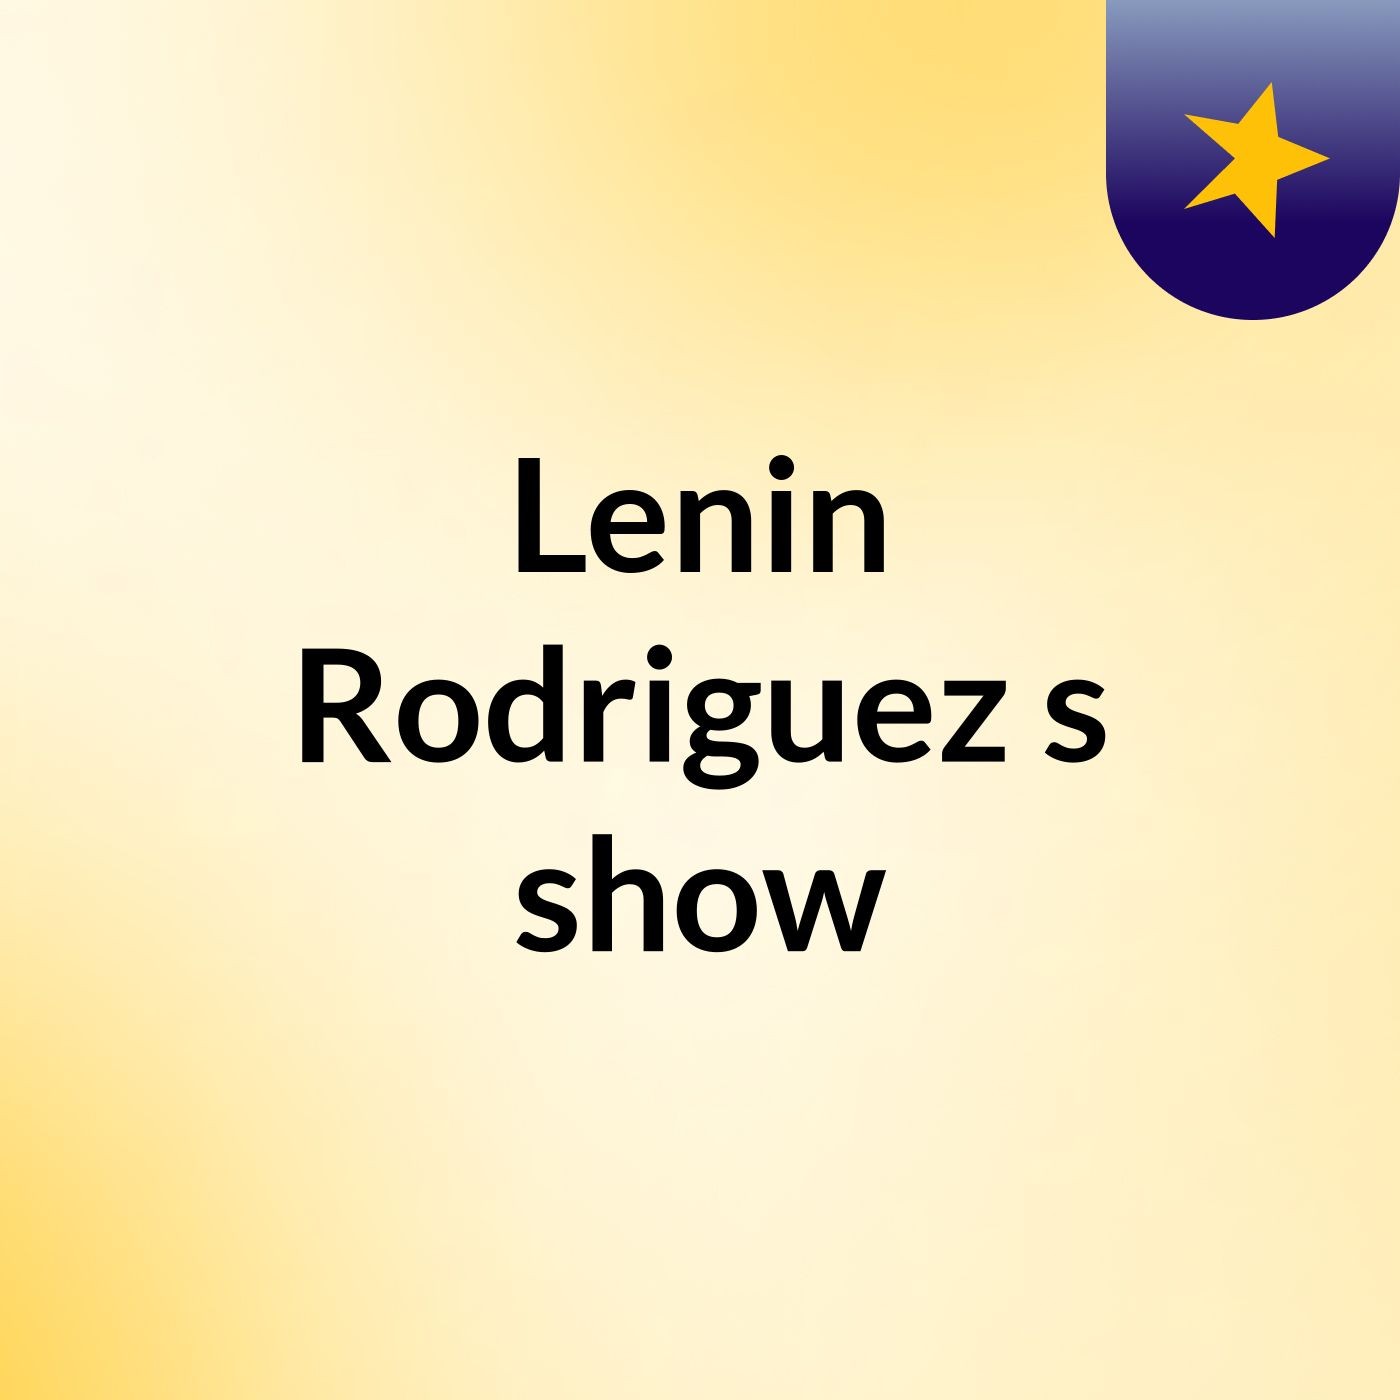 Episode 3 - Lenin Rodriguez's show